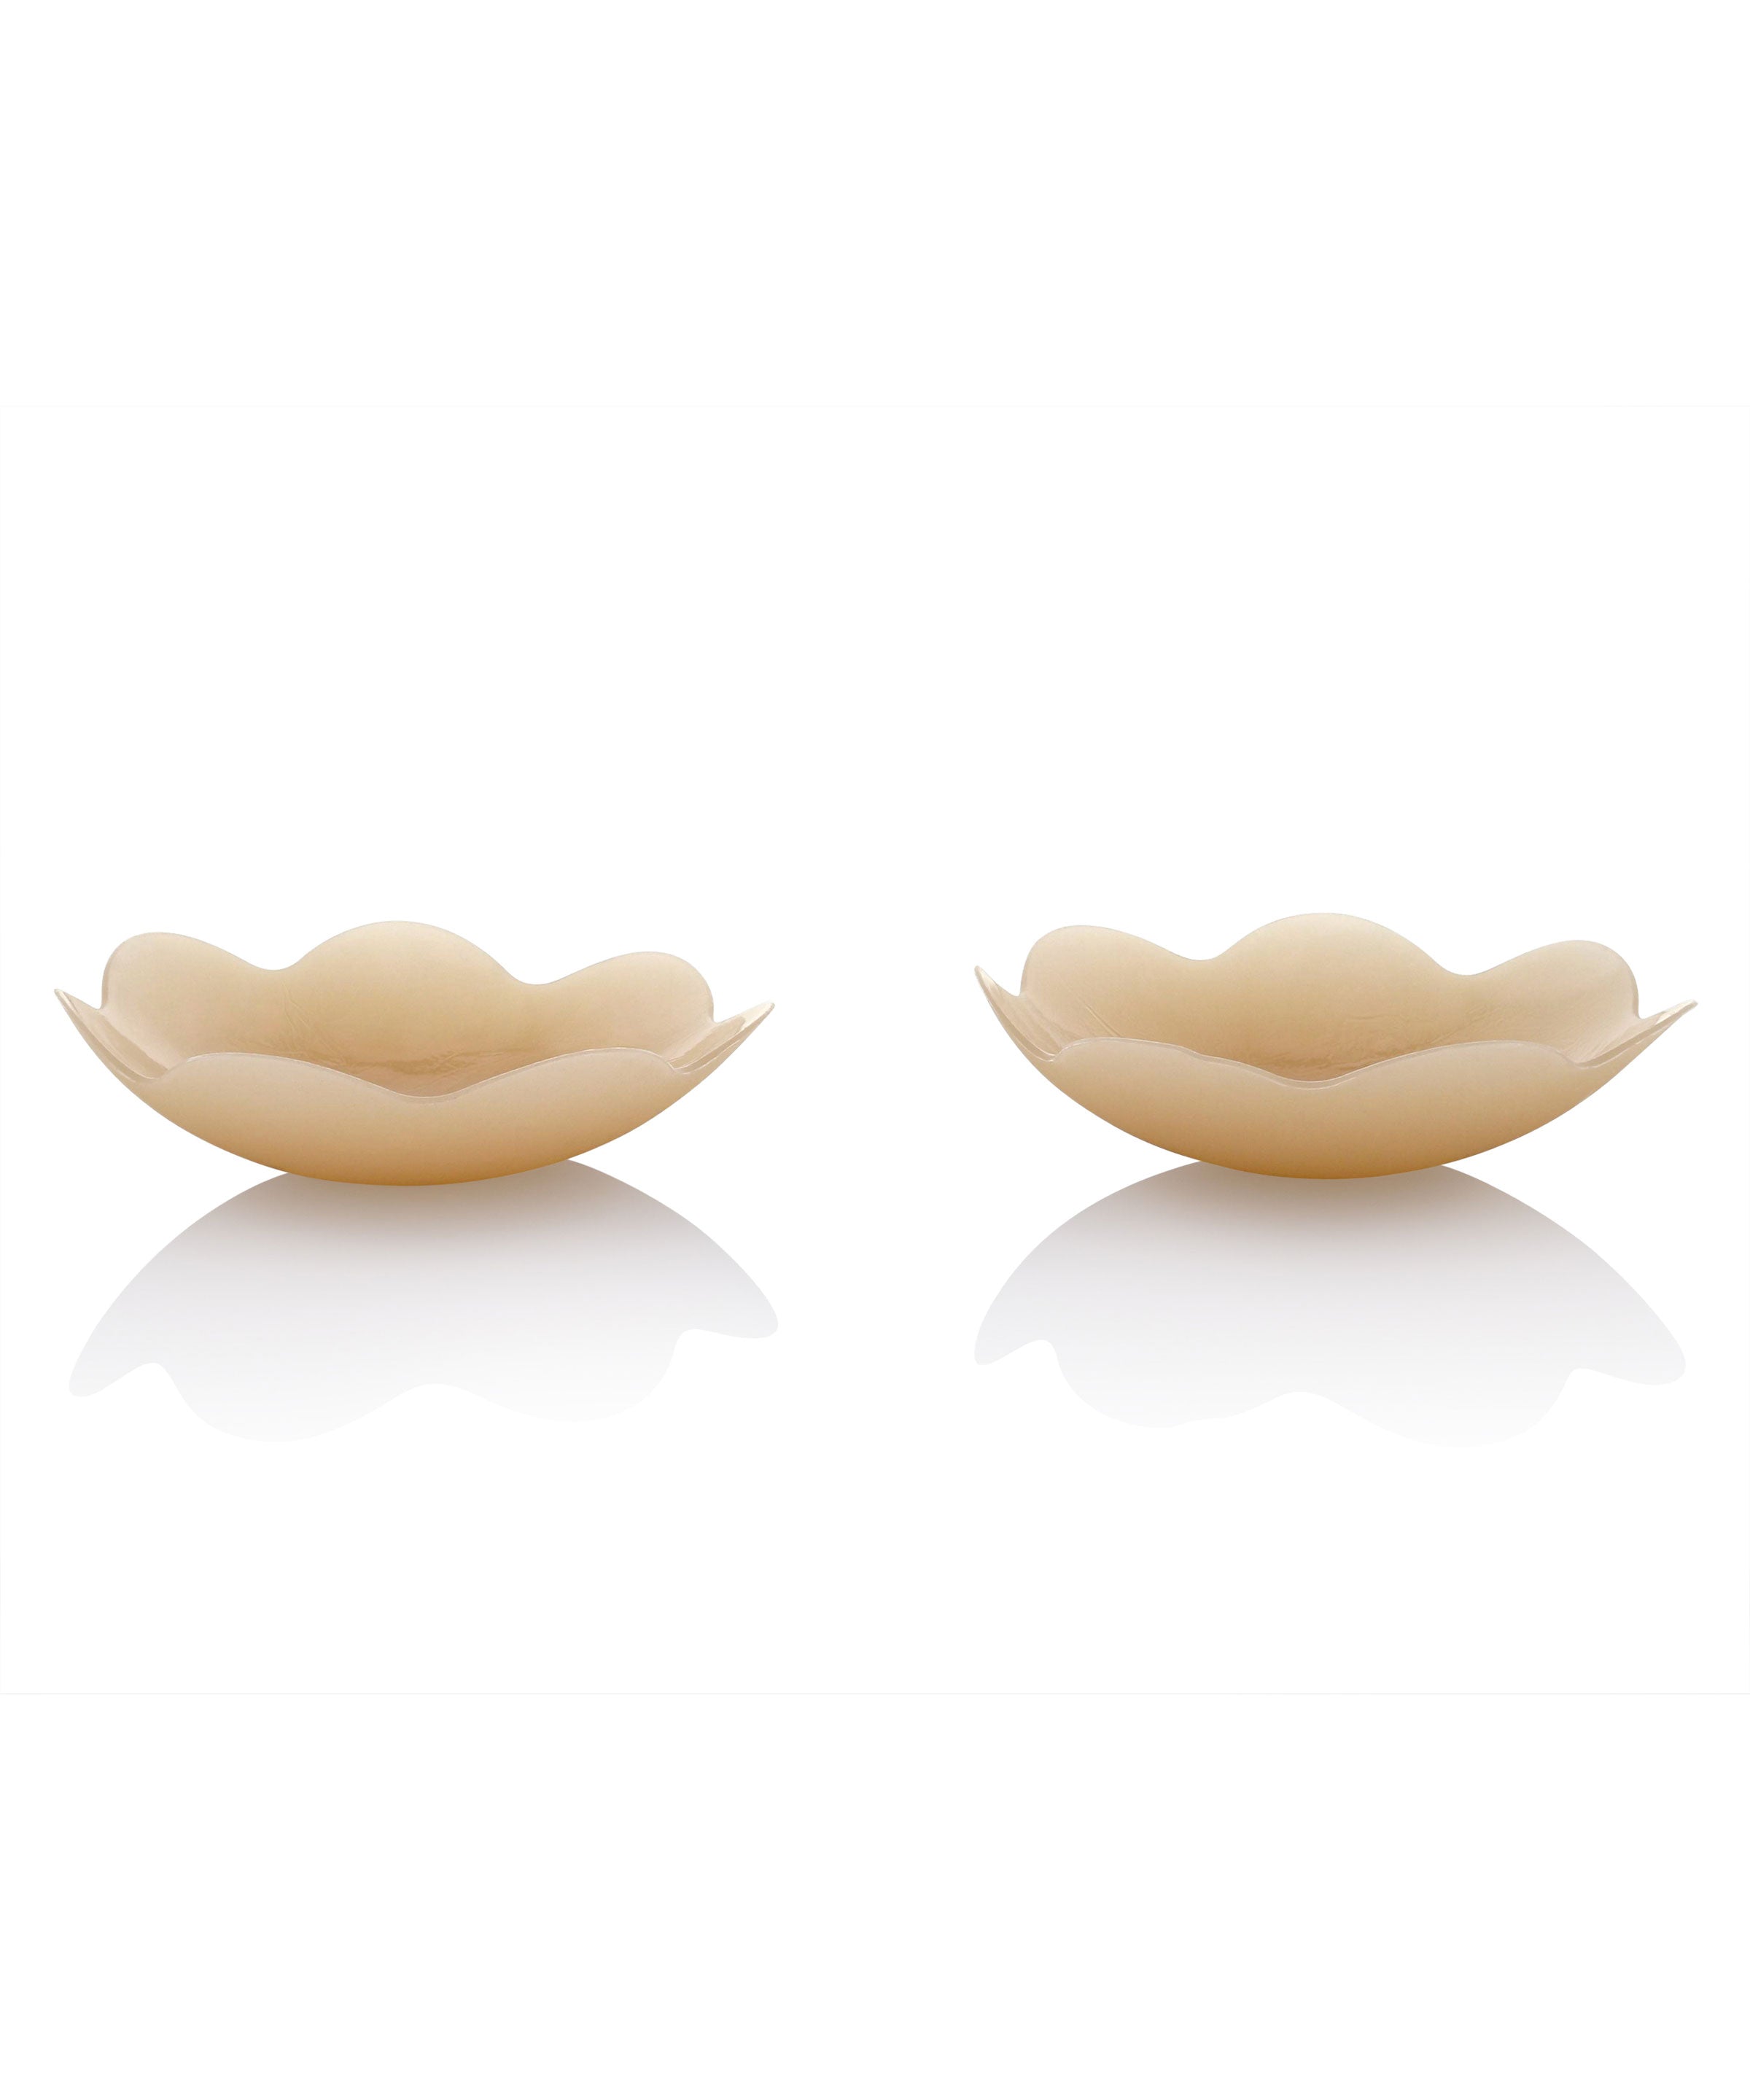 No-Show  Reusable Nipple Covers, Plastic-Free – NOOD UK